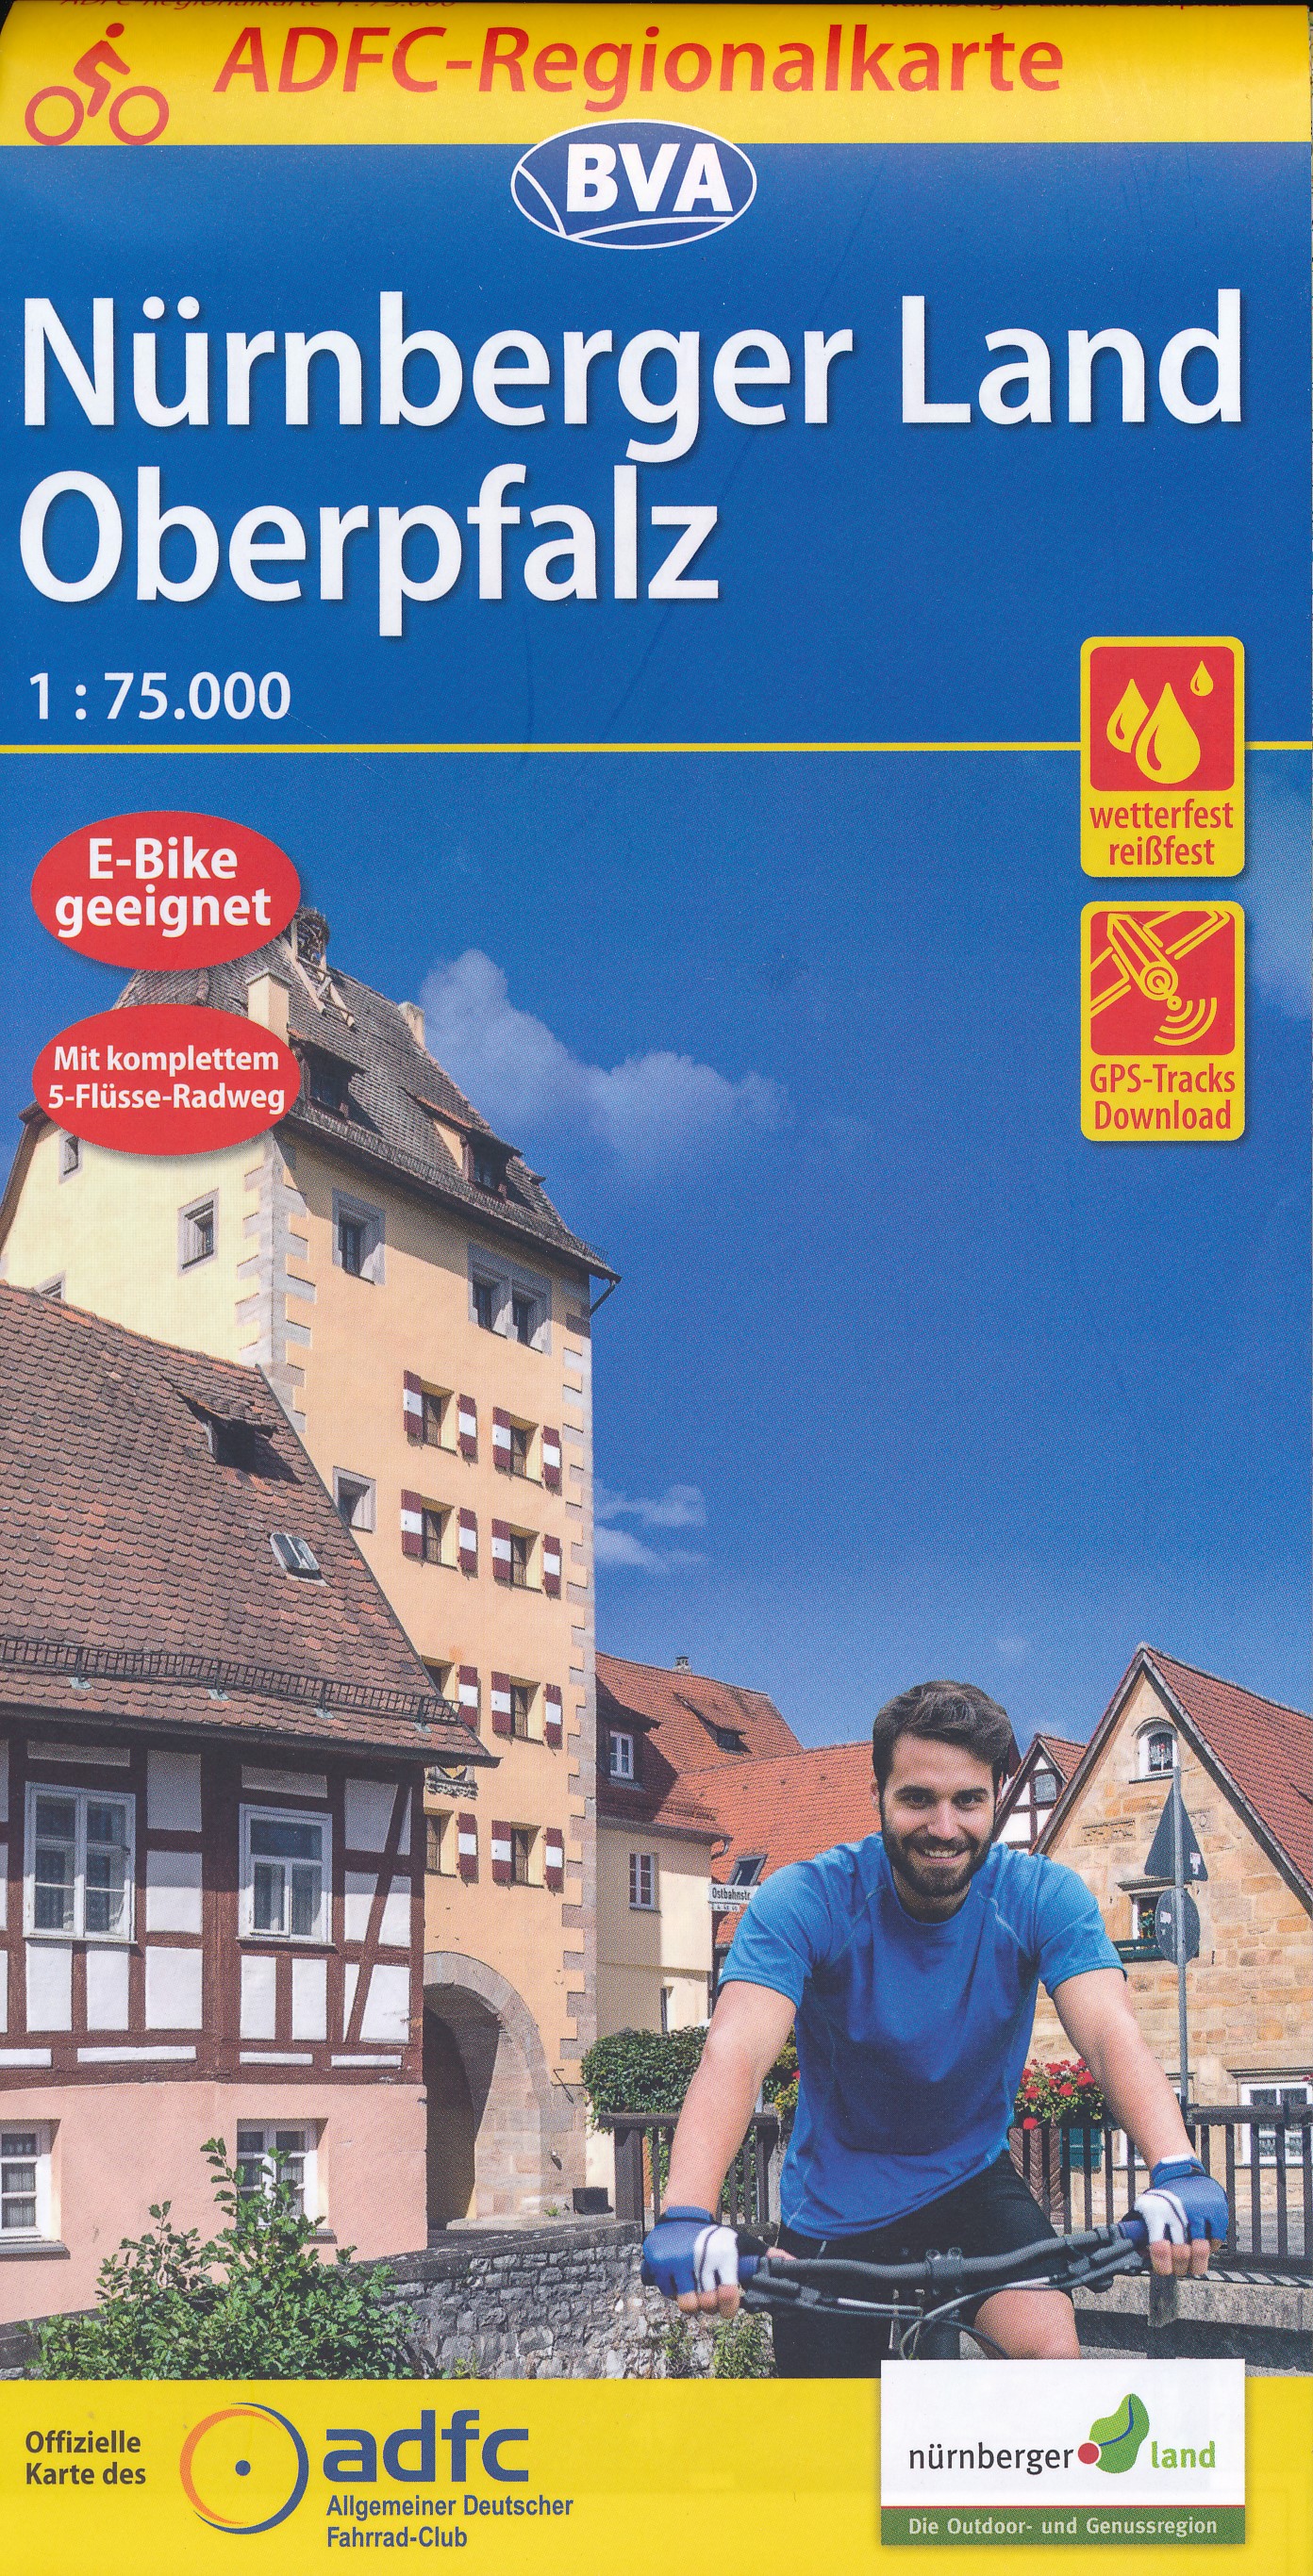 Online bestellen: Fietskaart ADFC Regionalkarte Nürnberger Land - Oberpfalz | BVA BikeMedia